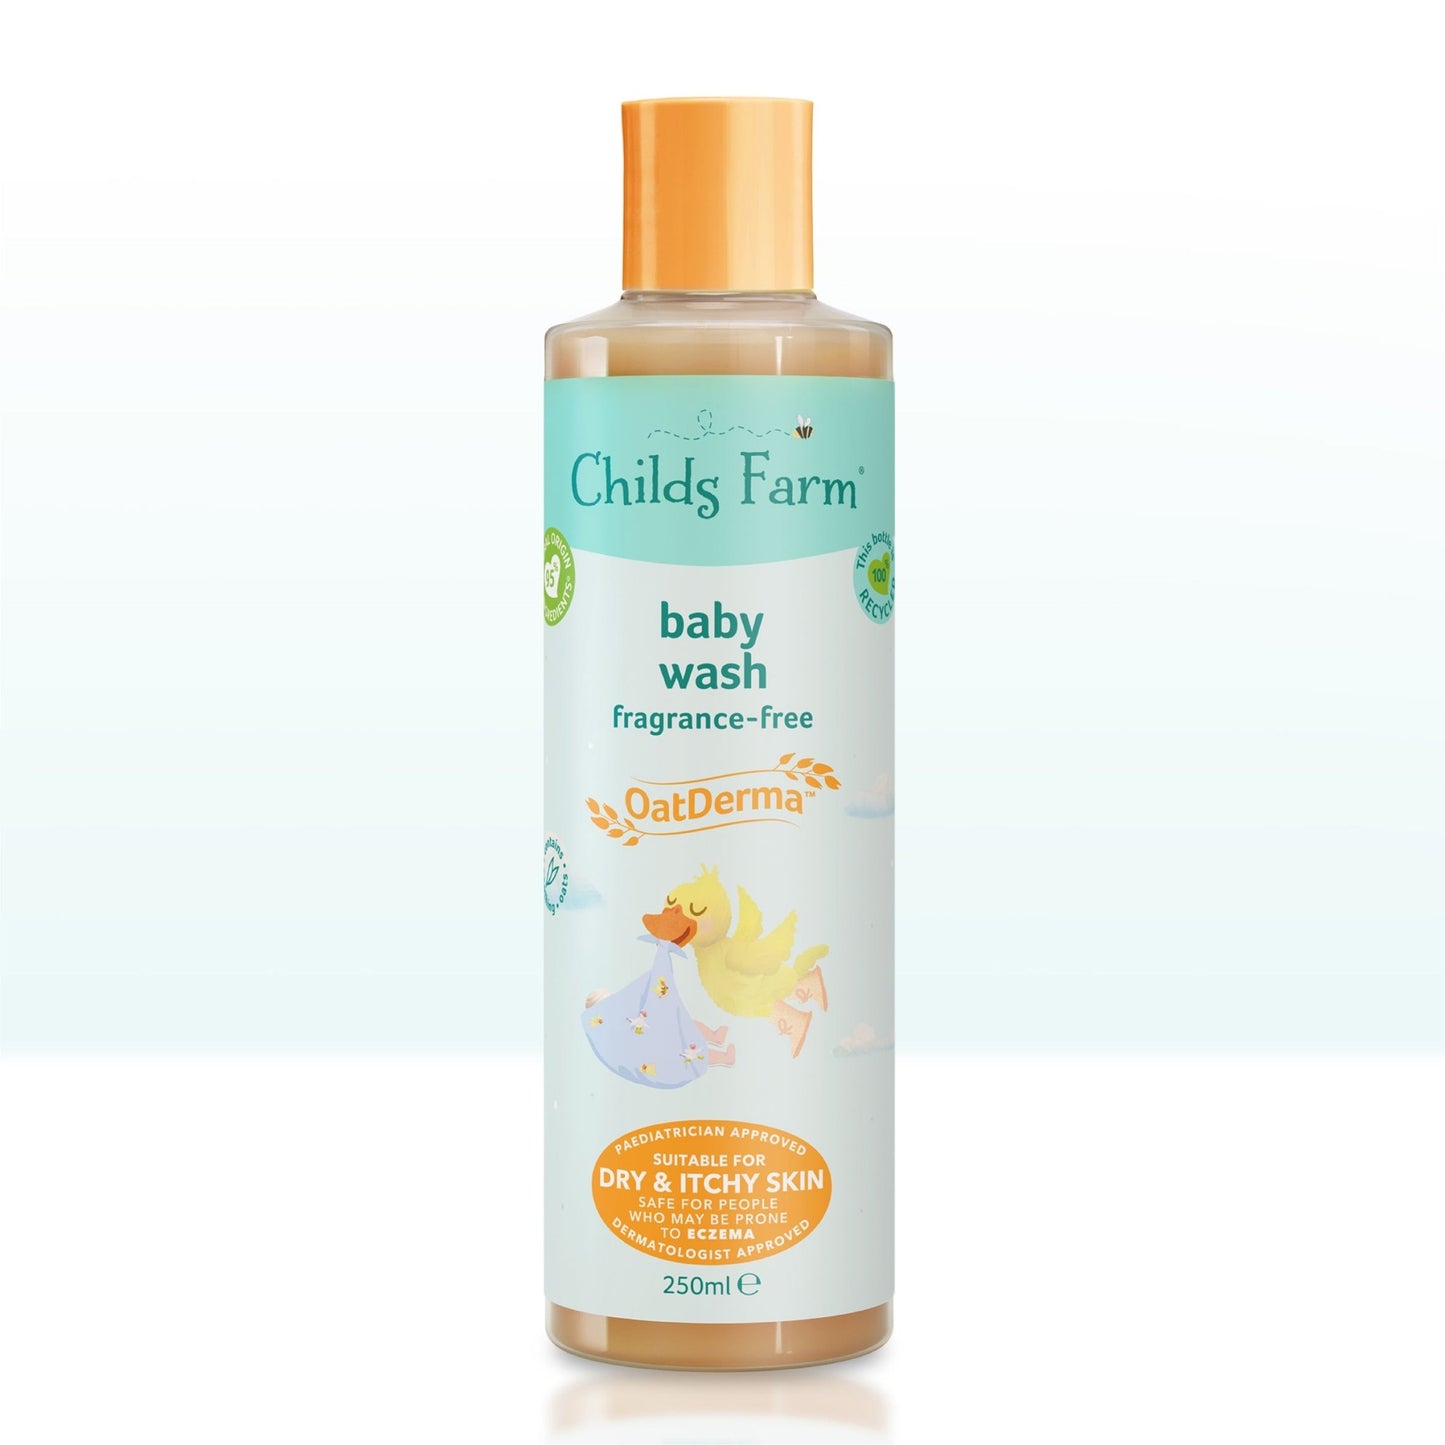 [STAFF] OatDerma™ baby wash fragrance-free